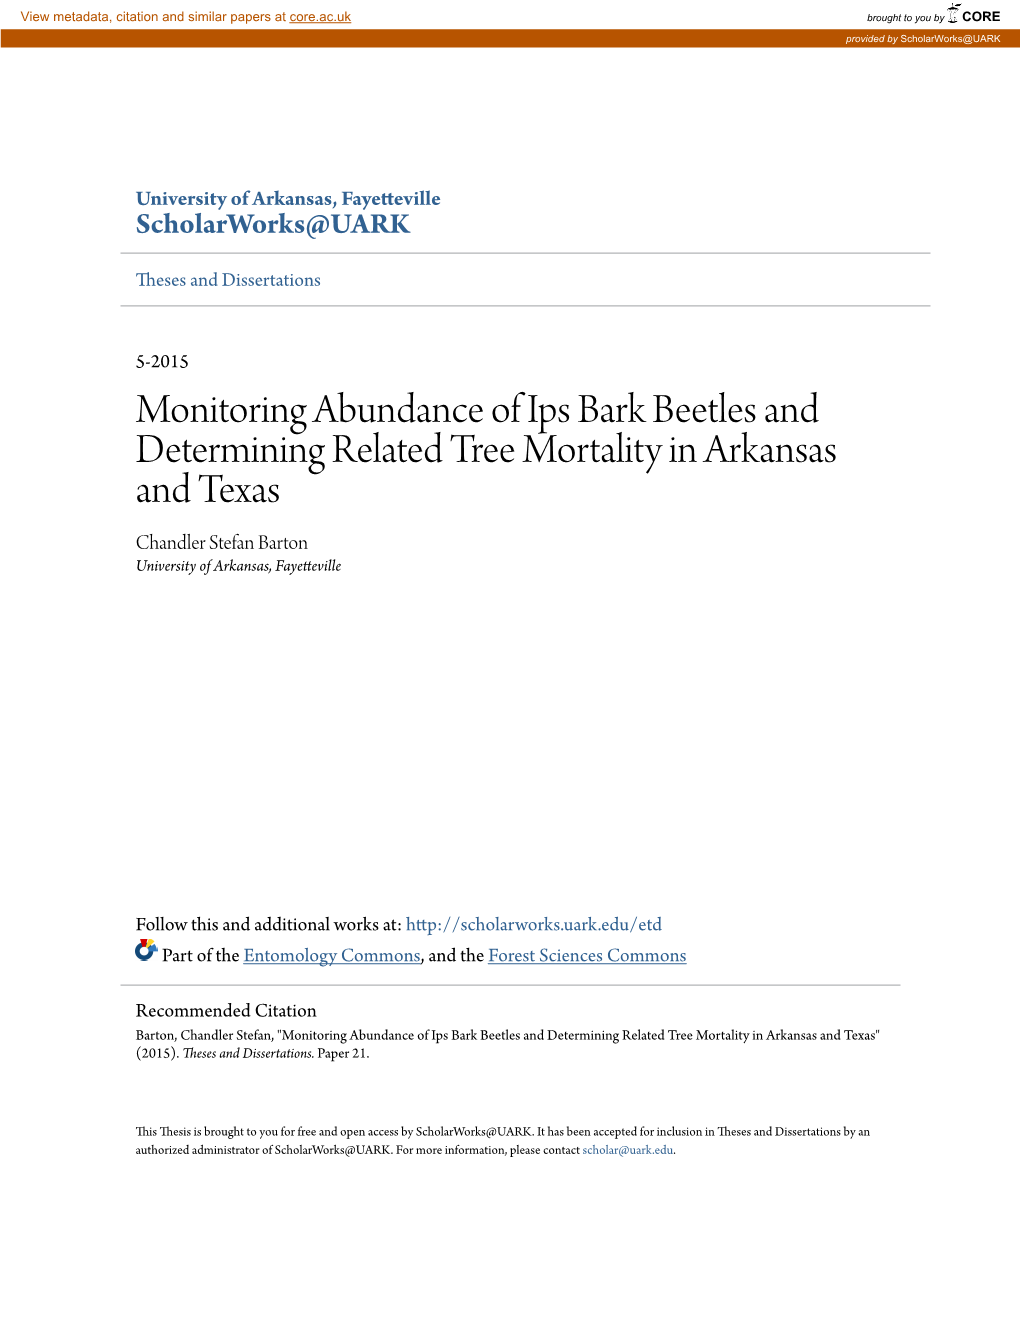 Monitoring Abundance of Ips Bark Beetles and Determining Related Tree Mortality in Arkansas and Texas Chandler Stefan Barton University of Arkansas, Fayetteville